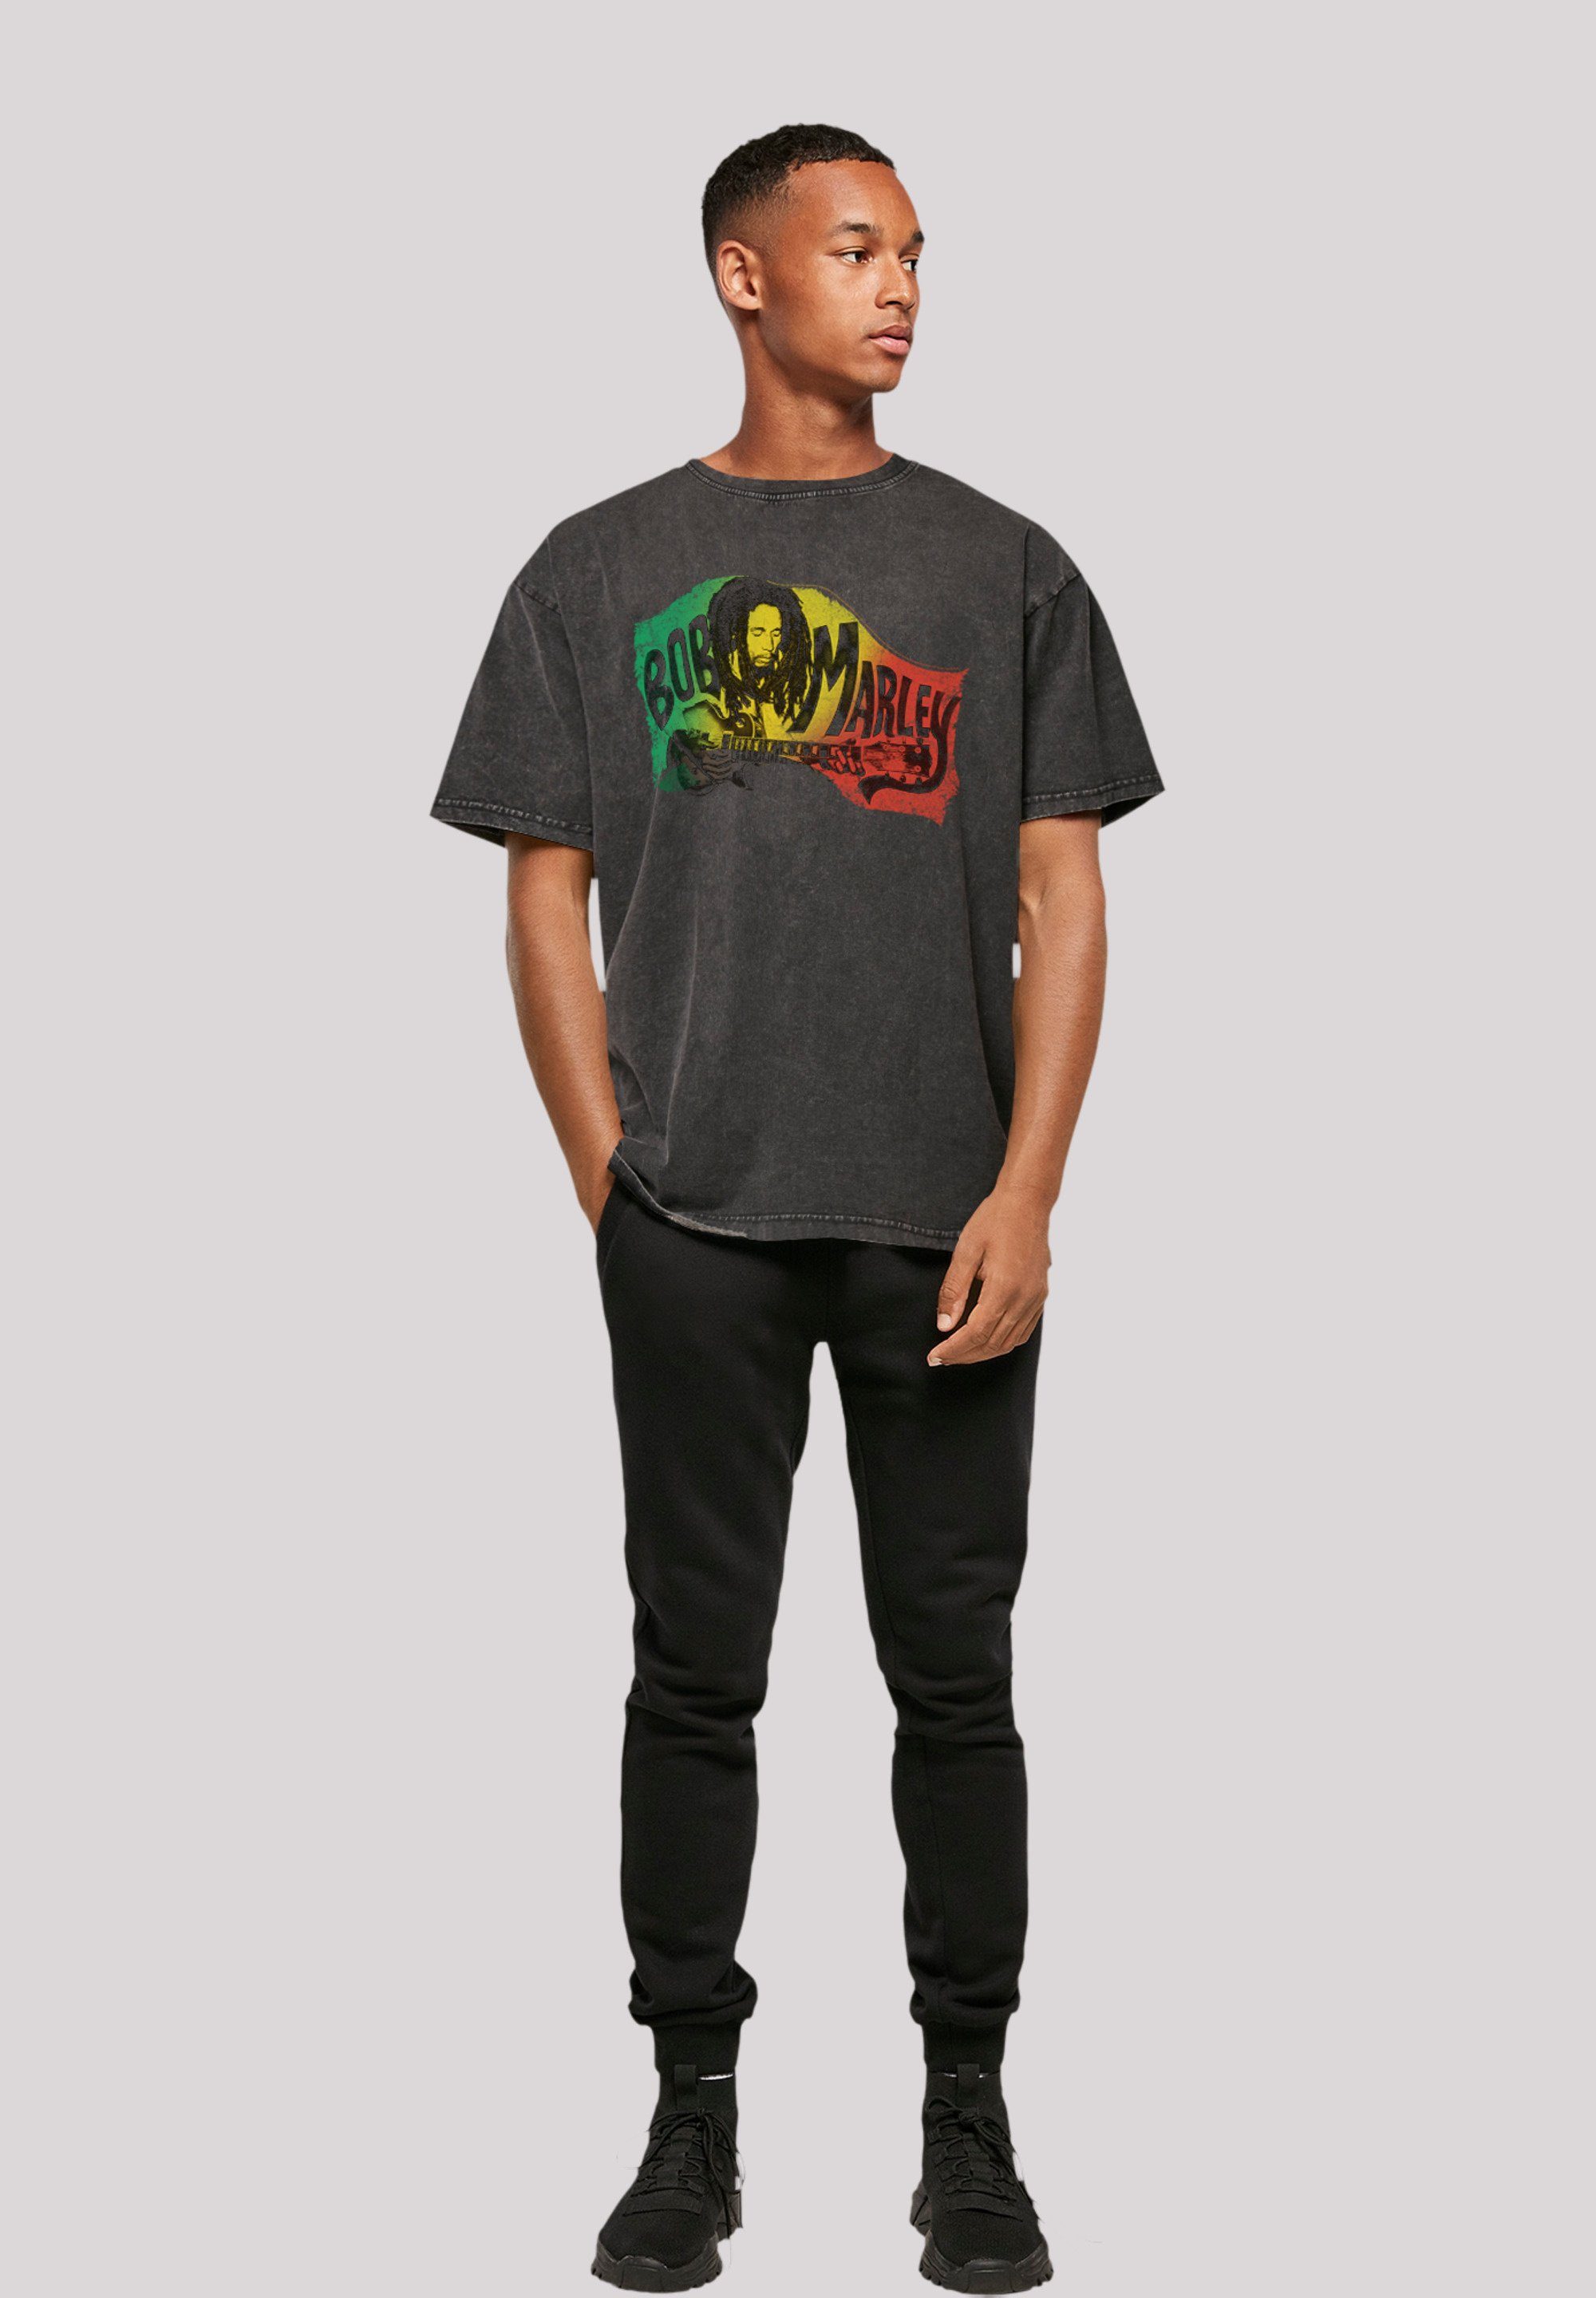 Music schwarz Rock Qualität, Chords Marley Off Reggae By Bob Premium F4NT4STIC T-Shirt Musik,